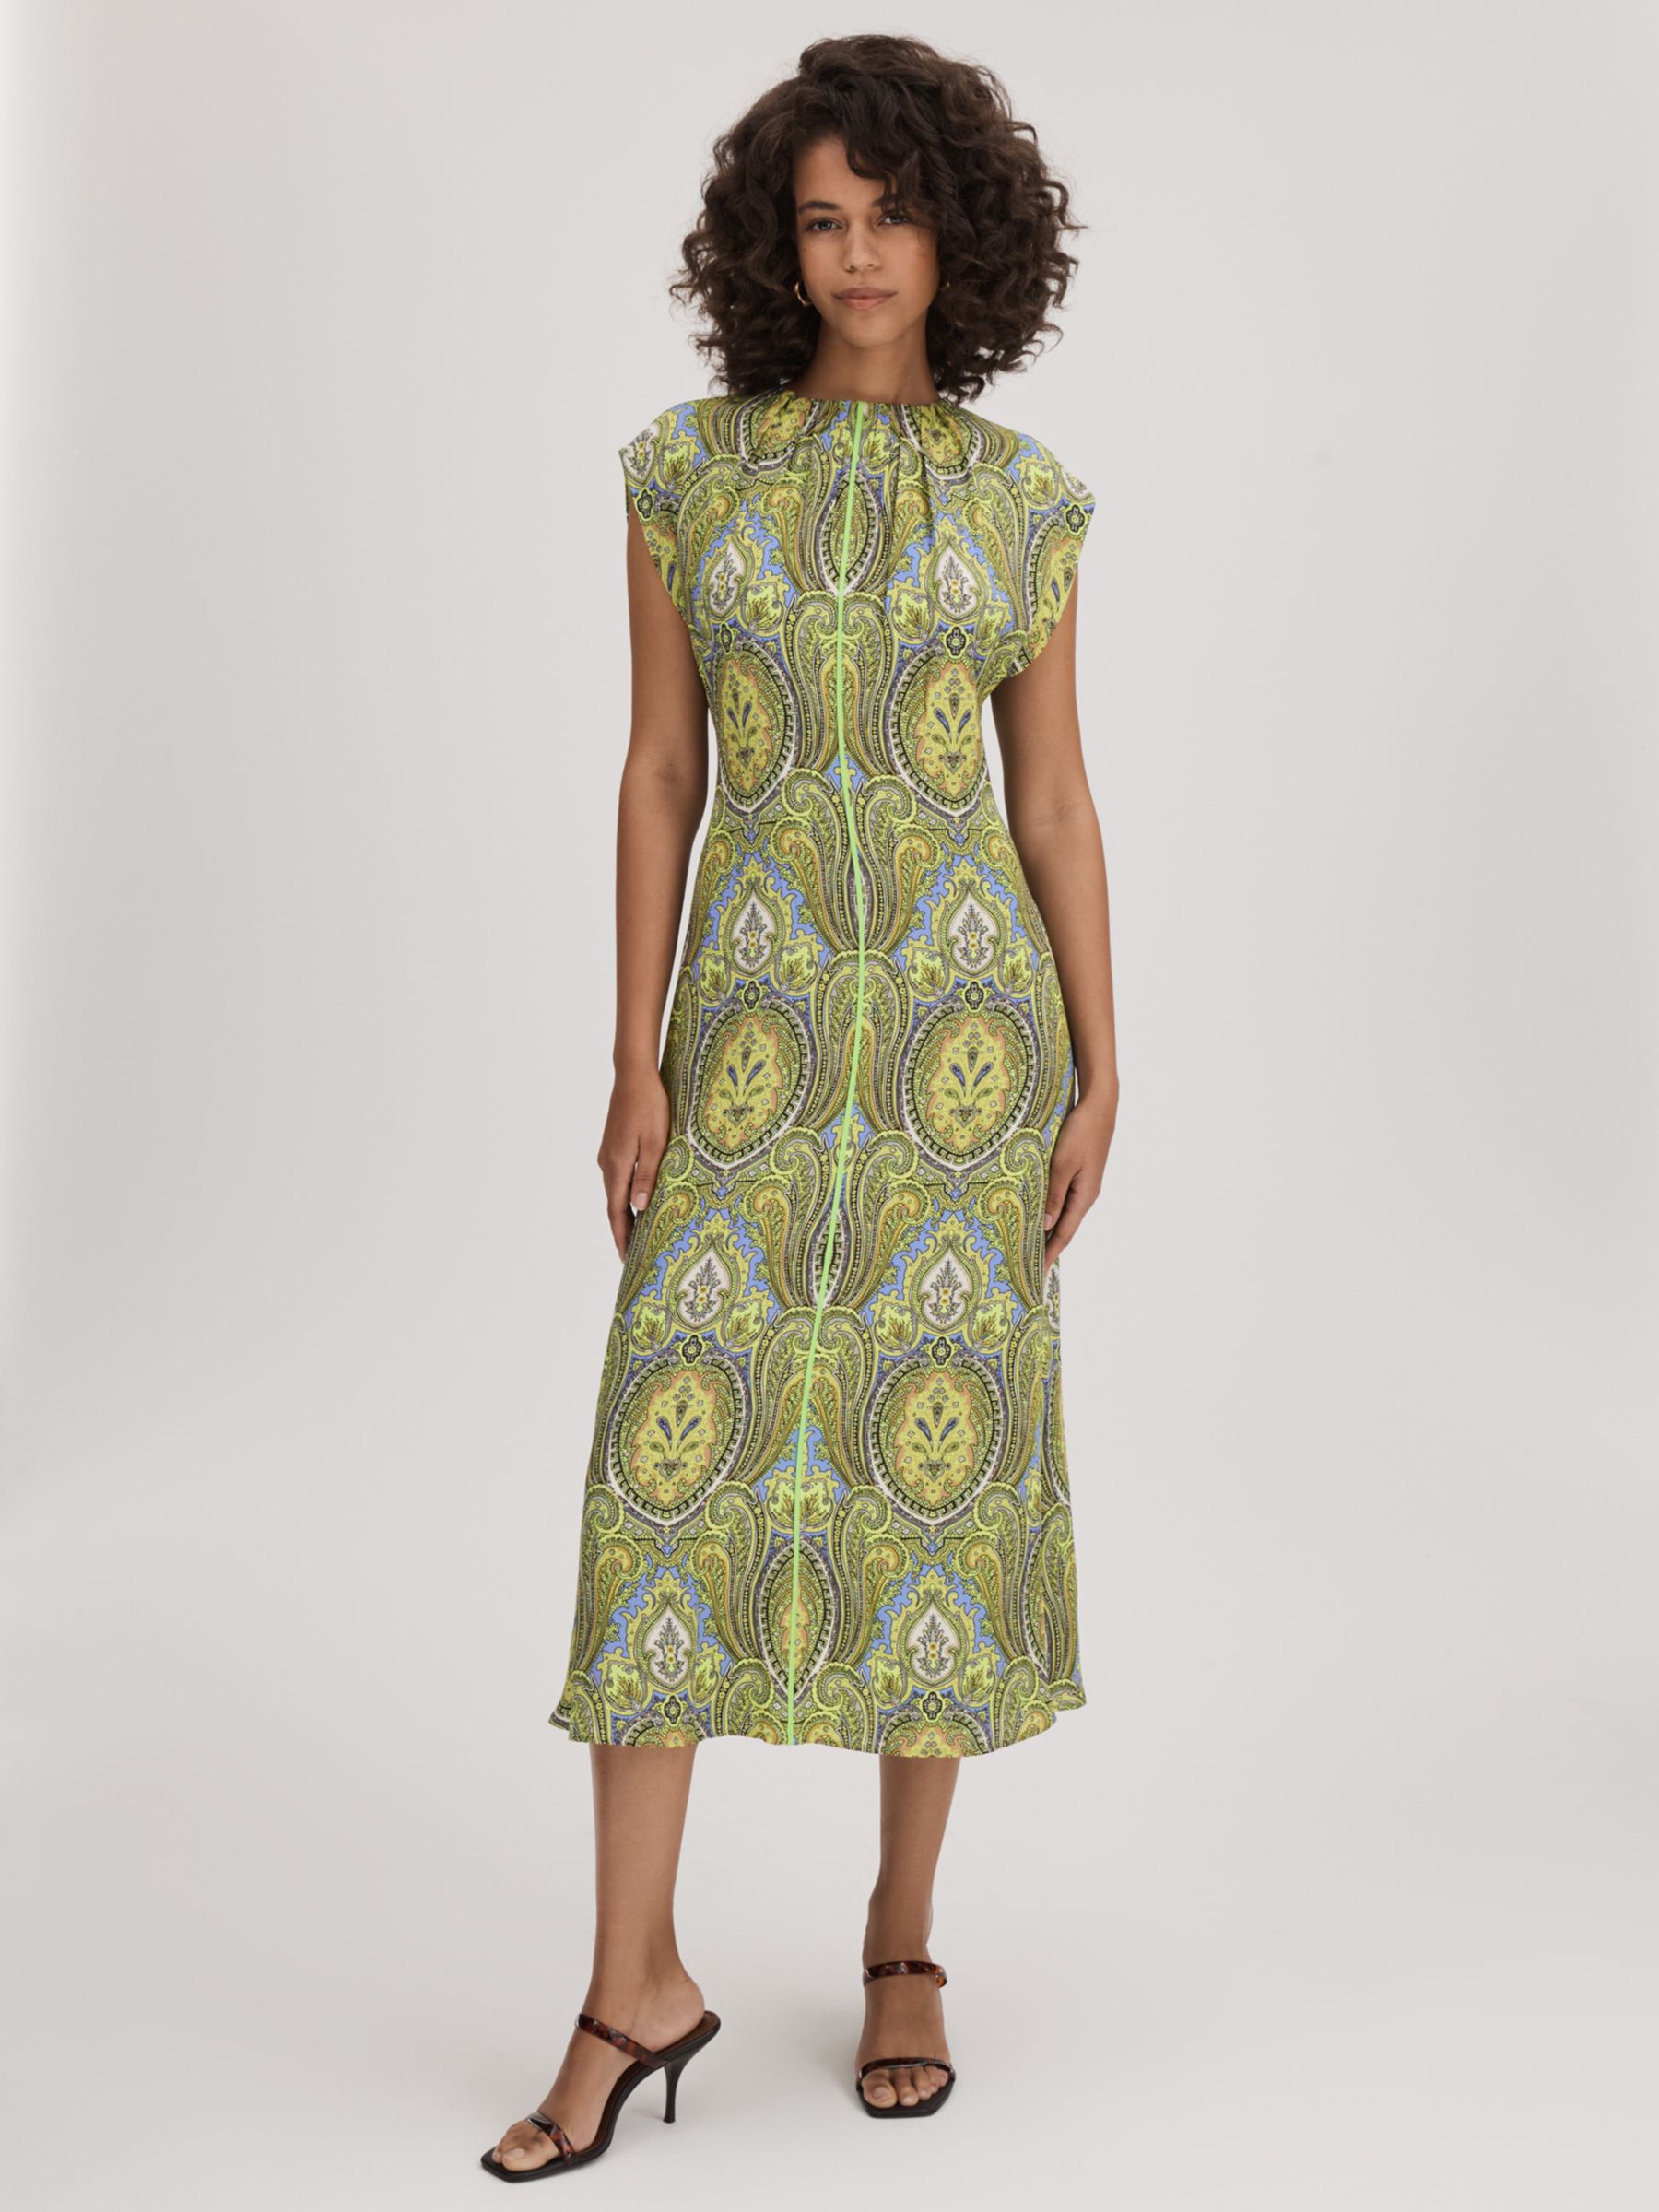 FLORERE Tie Back Paisley Print Midi Dress, Lime Green/Multi, 8